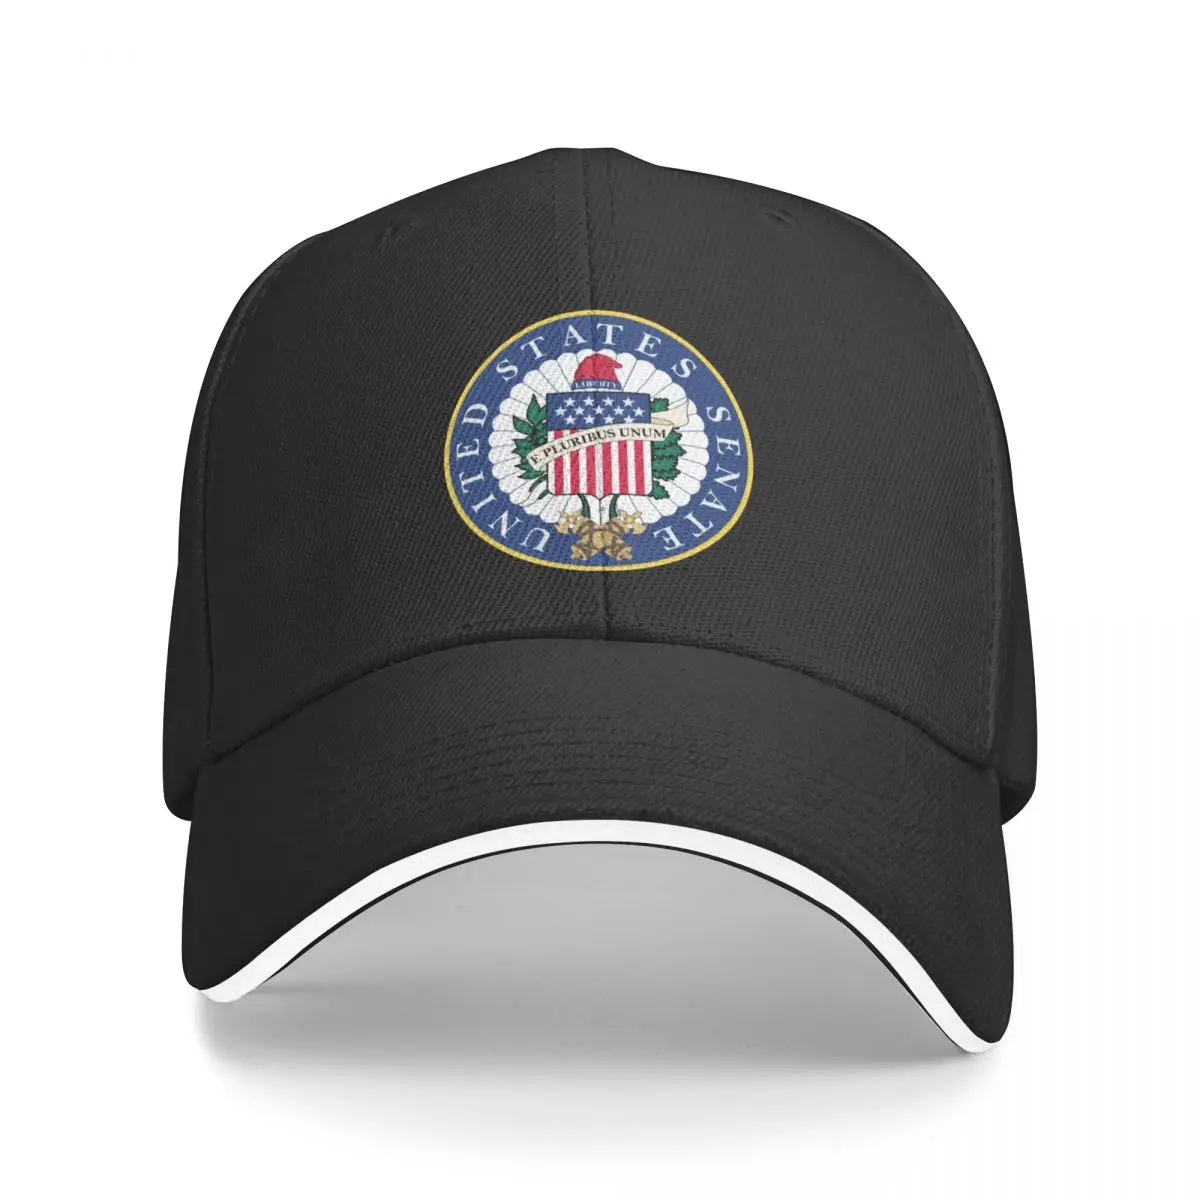 

United States Senate Emblem High Quality Baseball Cap birthday beach hat hiking hat Hats For Men Women's